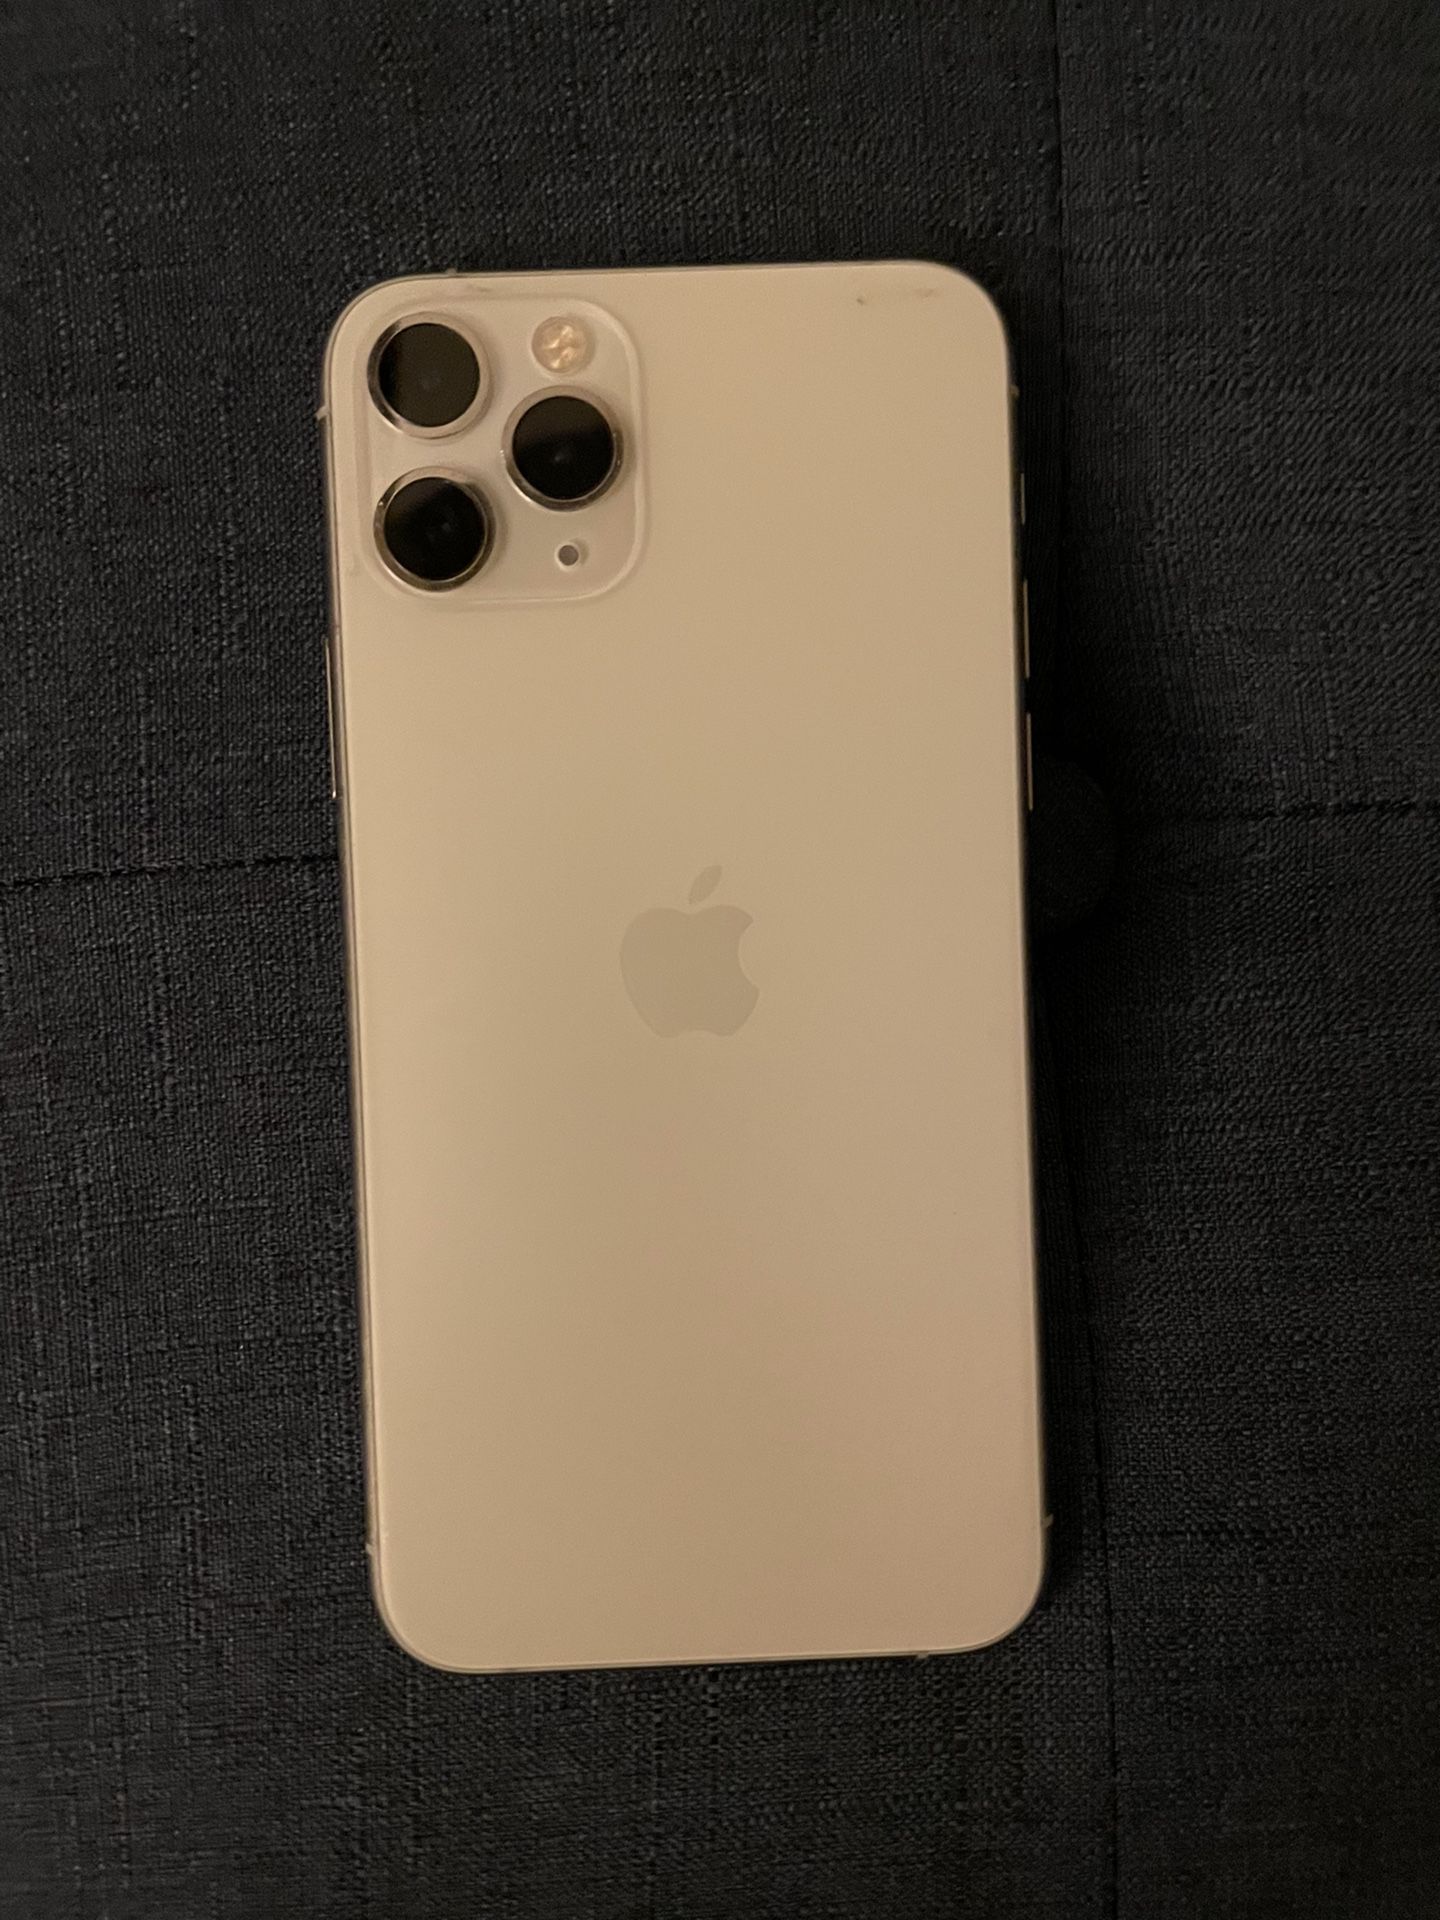 Unlocked 🍎 iPhone 11 Pro 256gb White (unlocked) 800obo